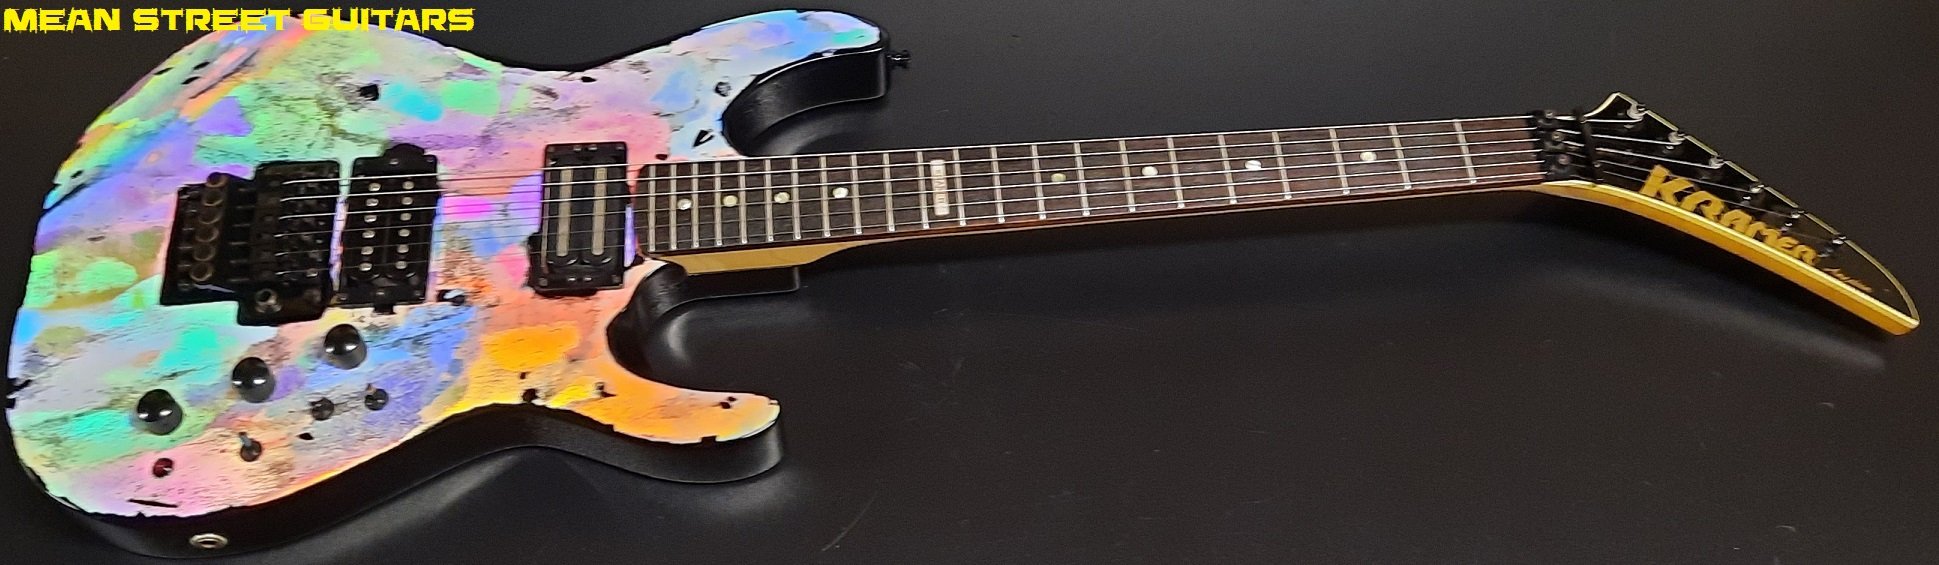 Mean Street Guitars Holoflash AT Kramer Cliff H pic 3.jpg